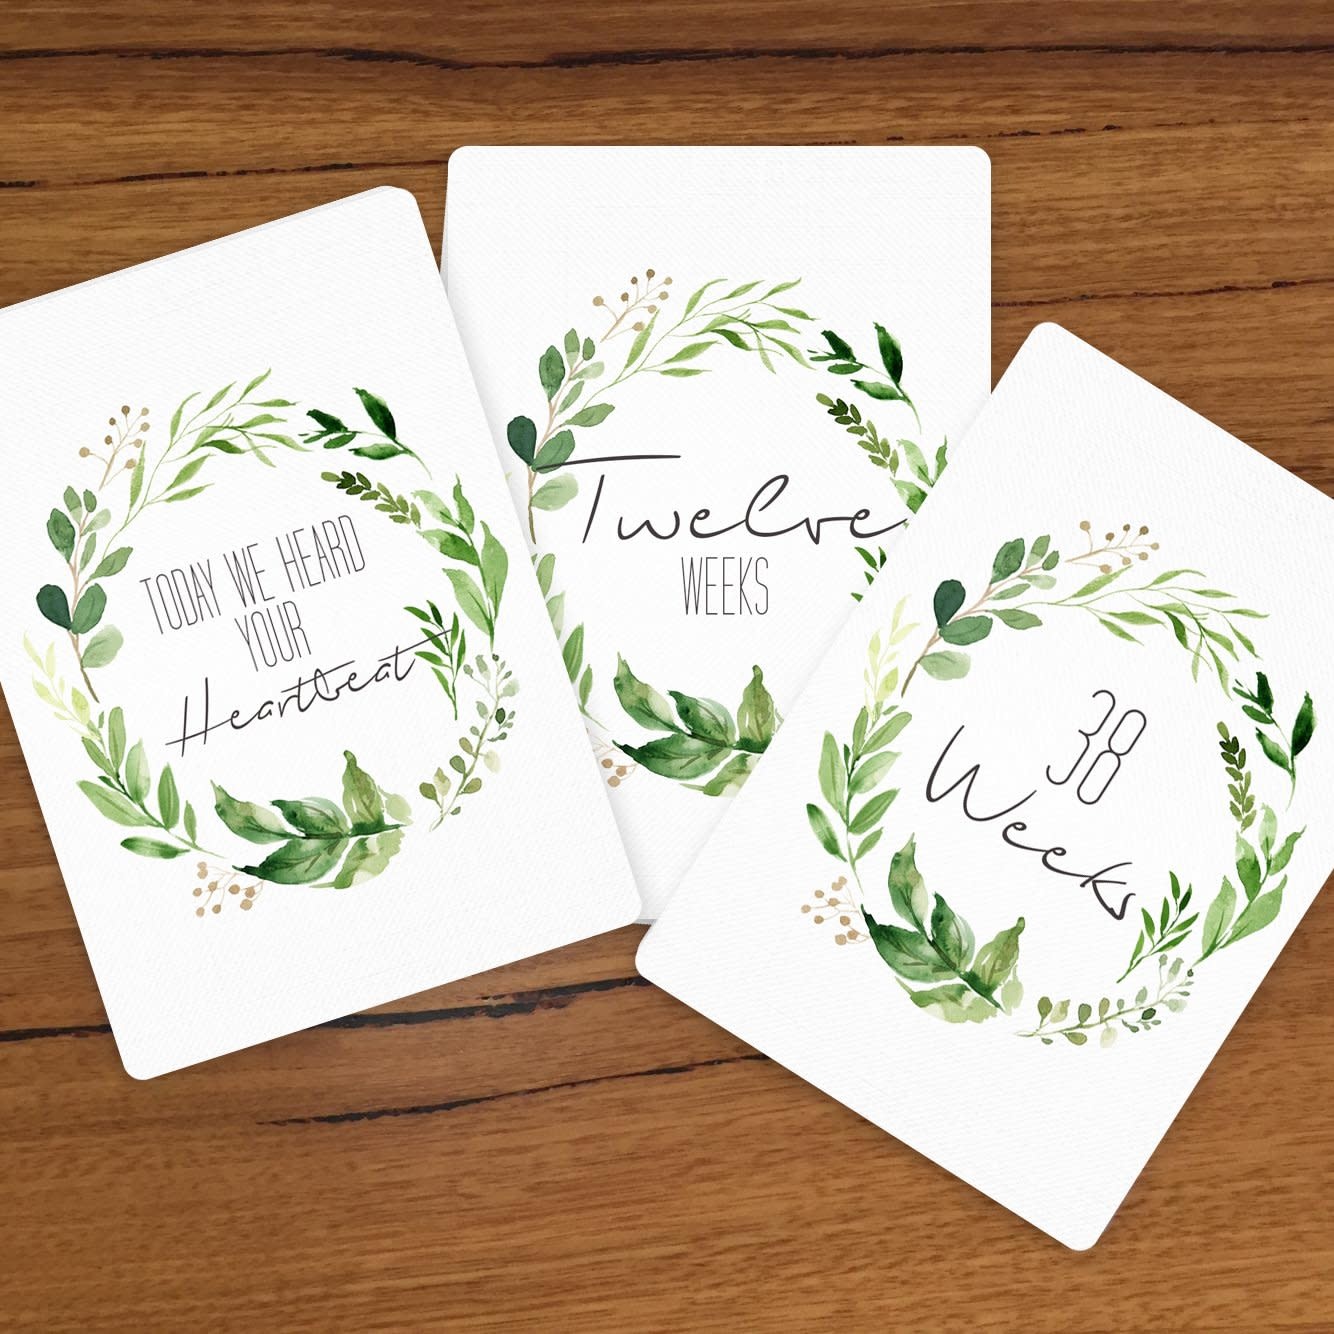 Joseph Prints Joseph Prints Leafy Wreath Pregnancy Milestone Cards